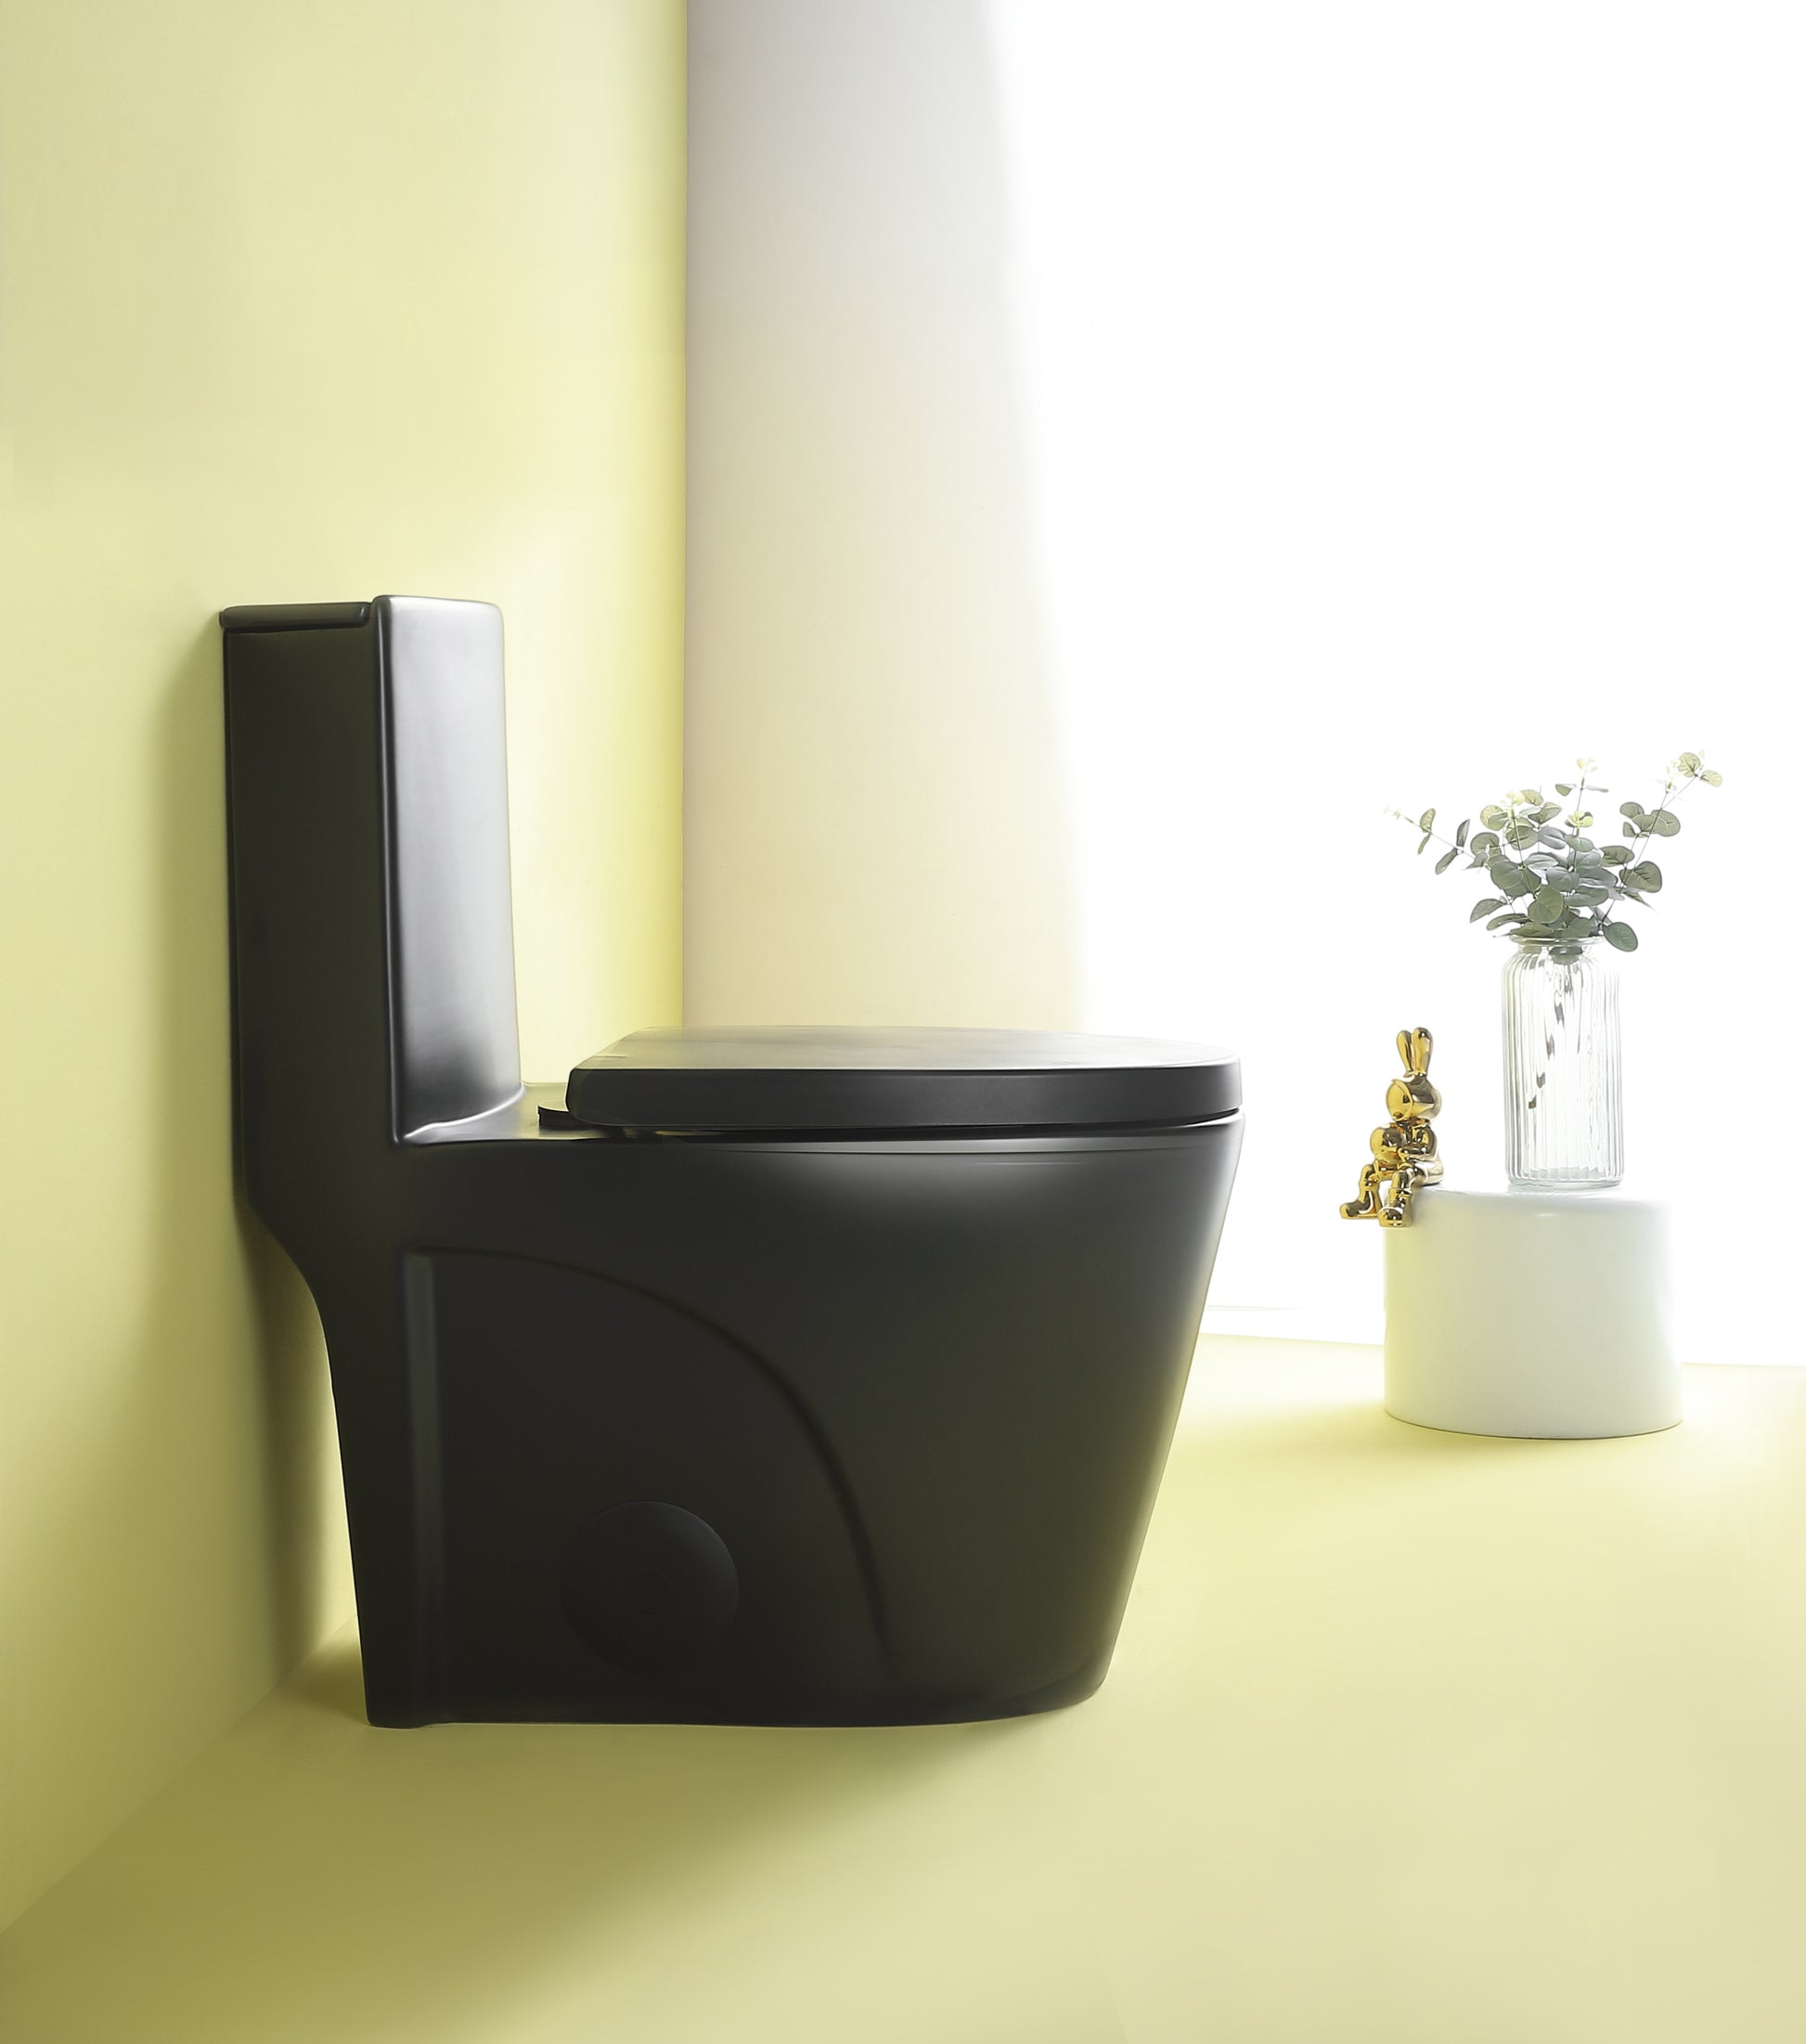 black toilet seat cover 24T01 MBP01 matte black-acrylic